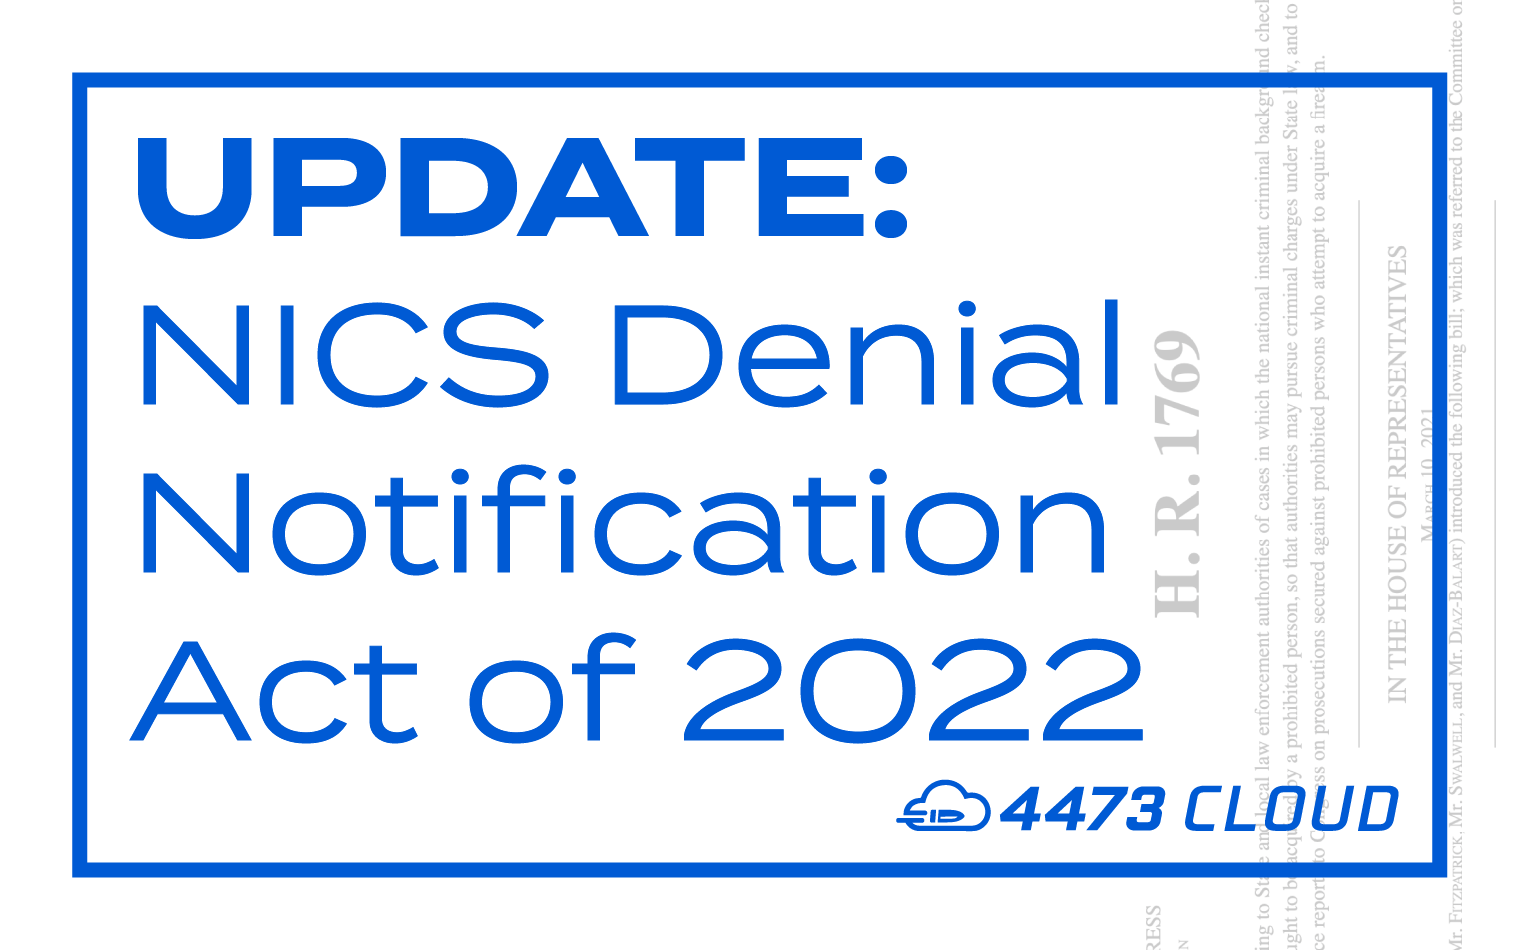 NICS Denial Notification Act of 2022